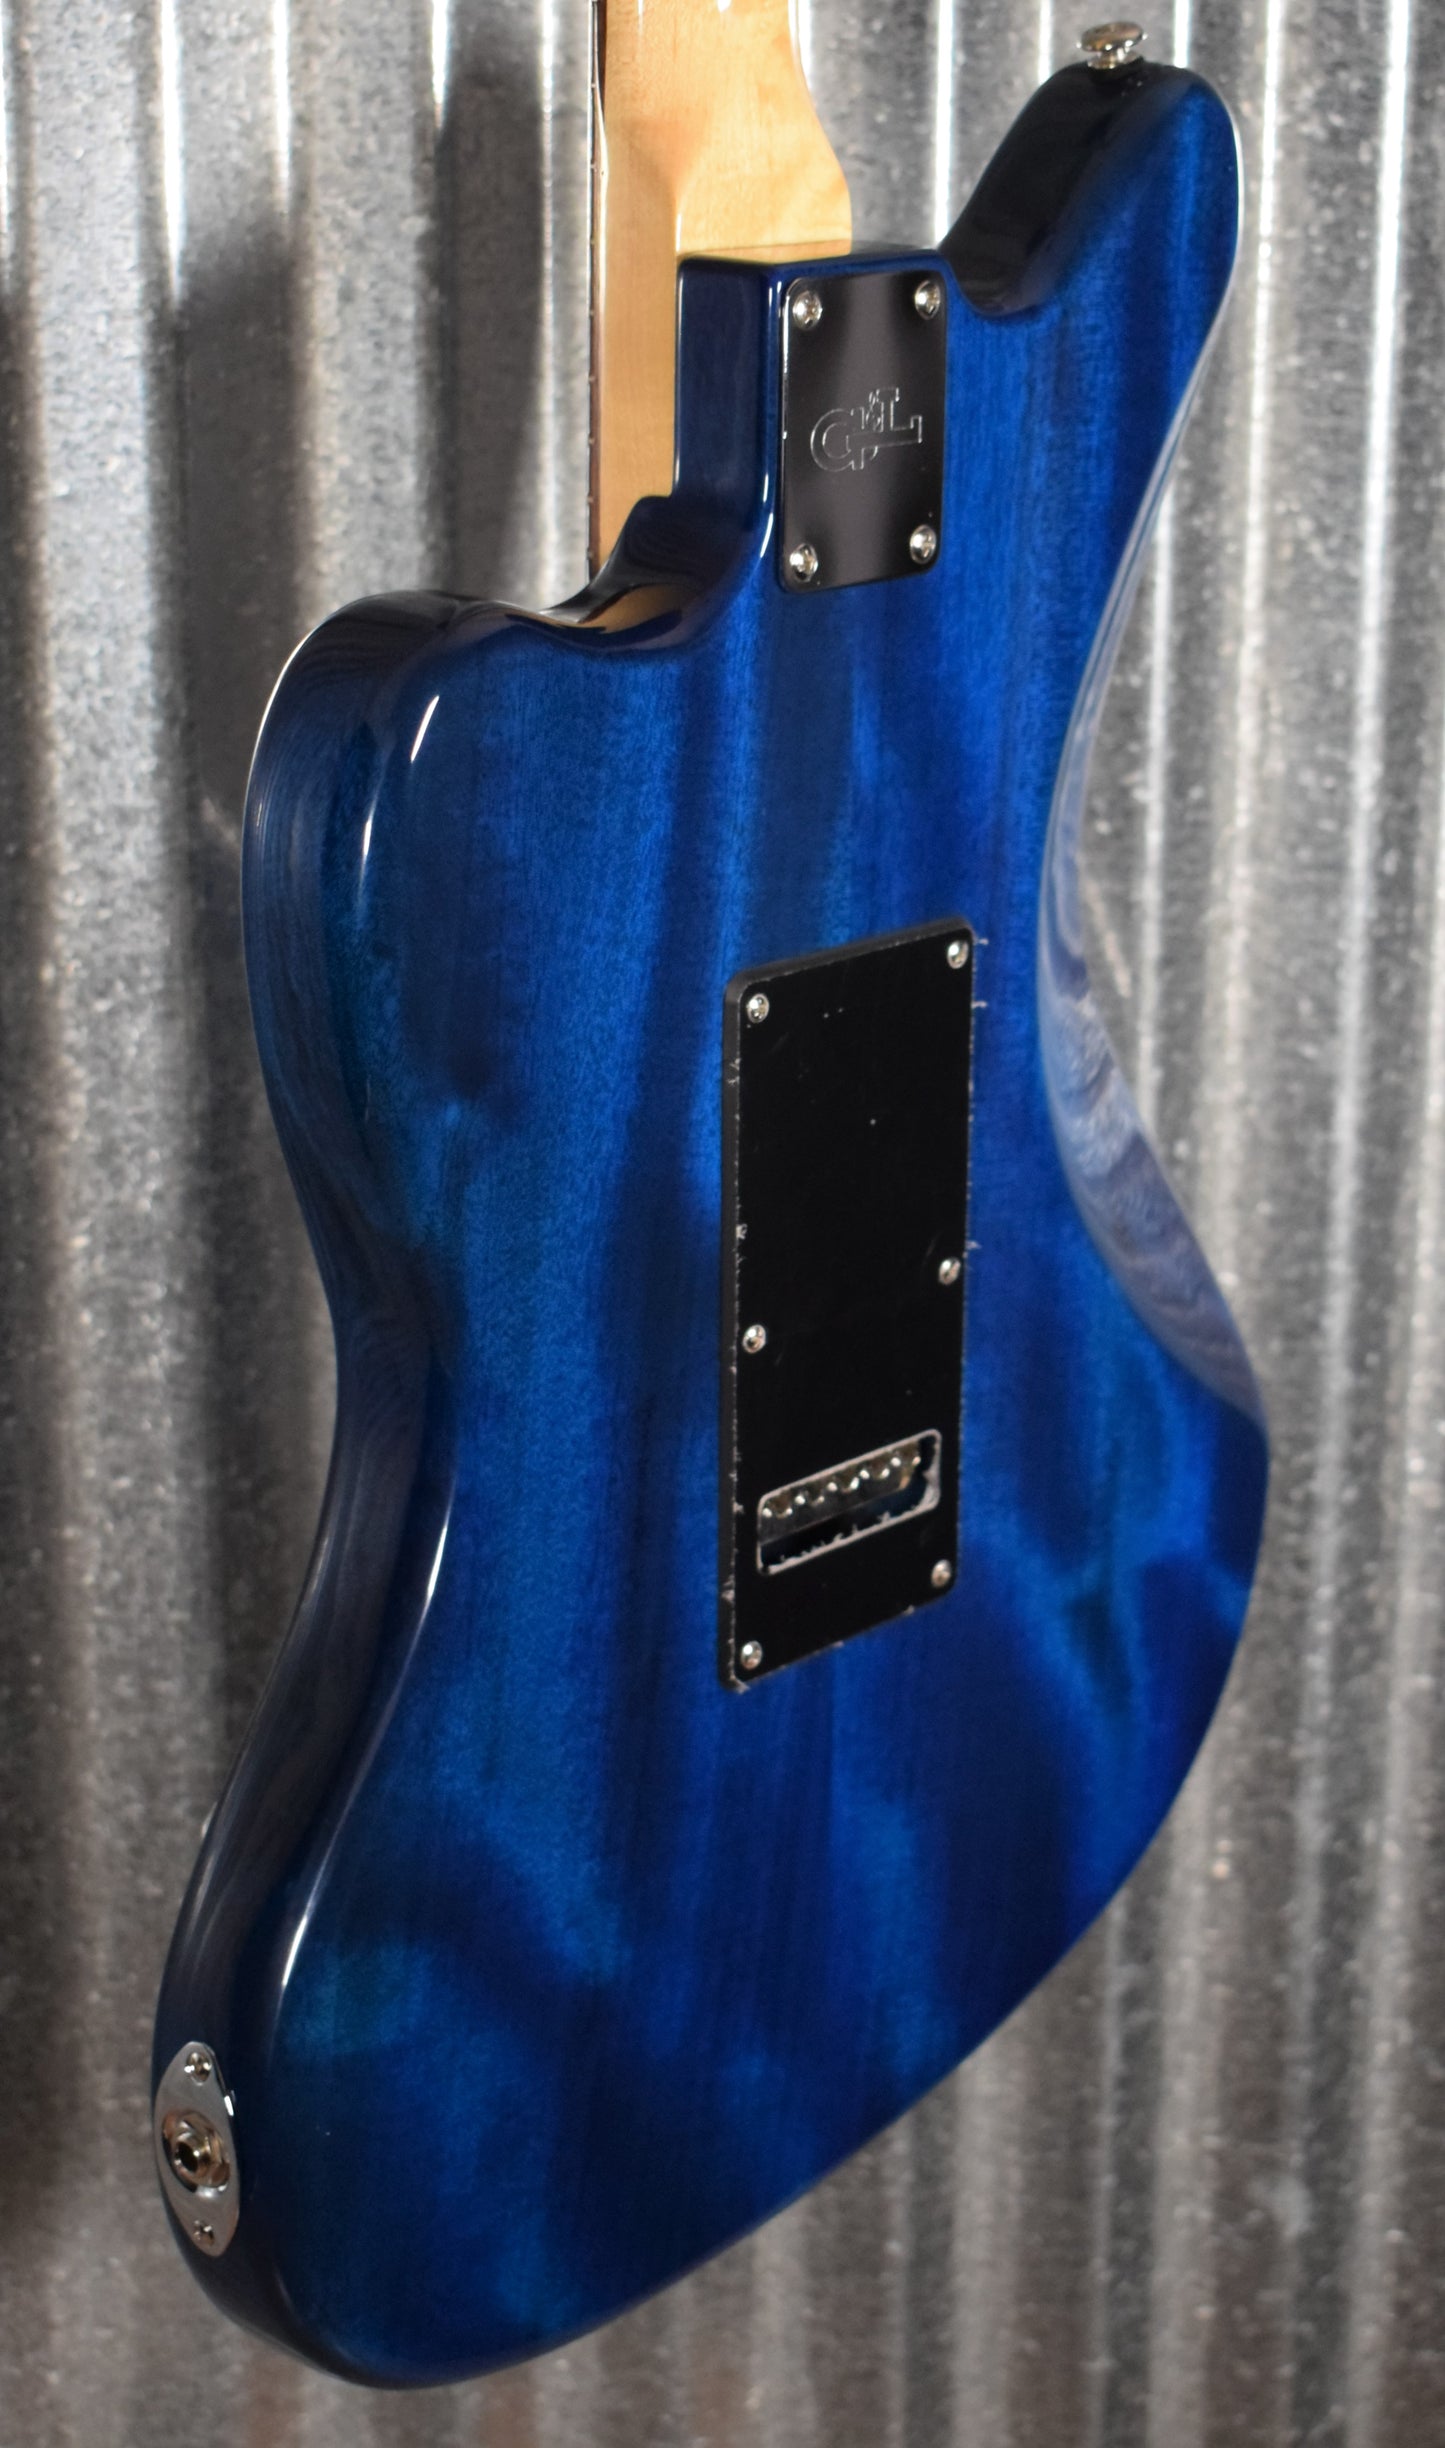 G&L USA CLF Doheny V12 Clear Blue Guitar & Case #6142